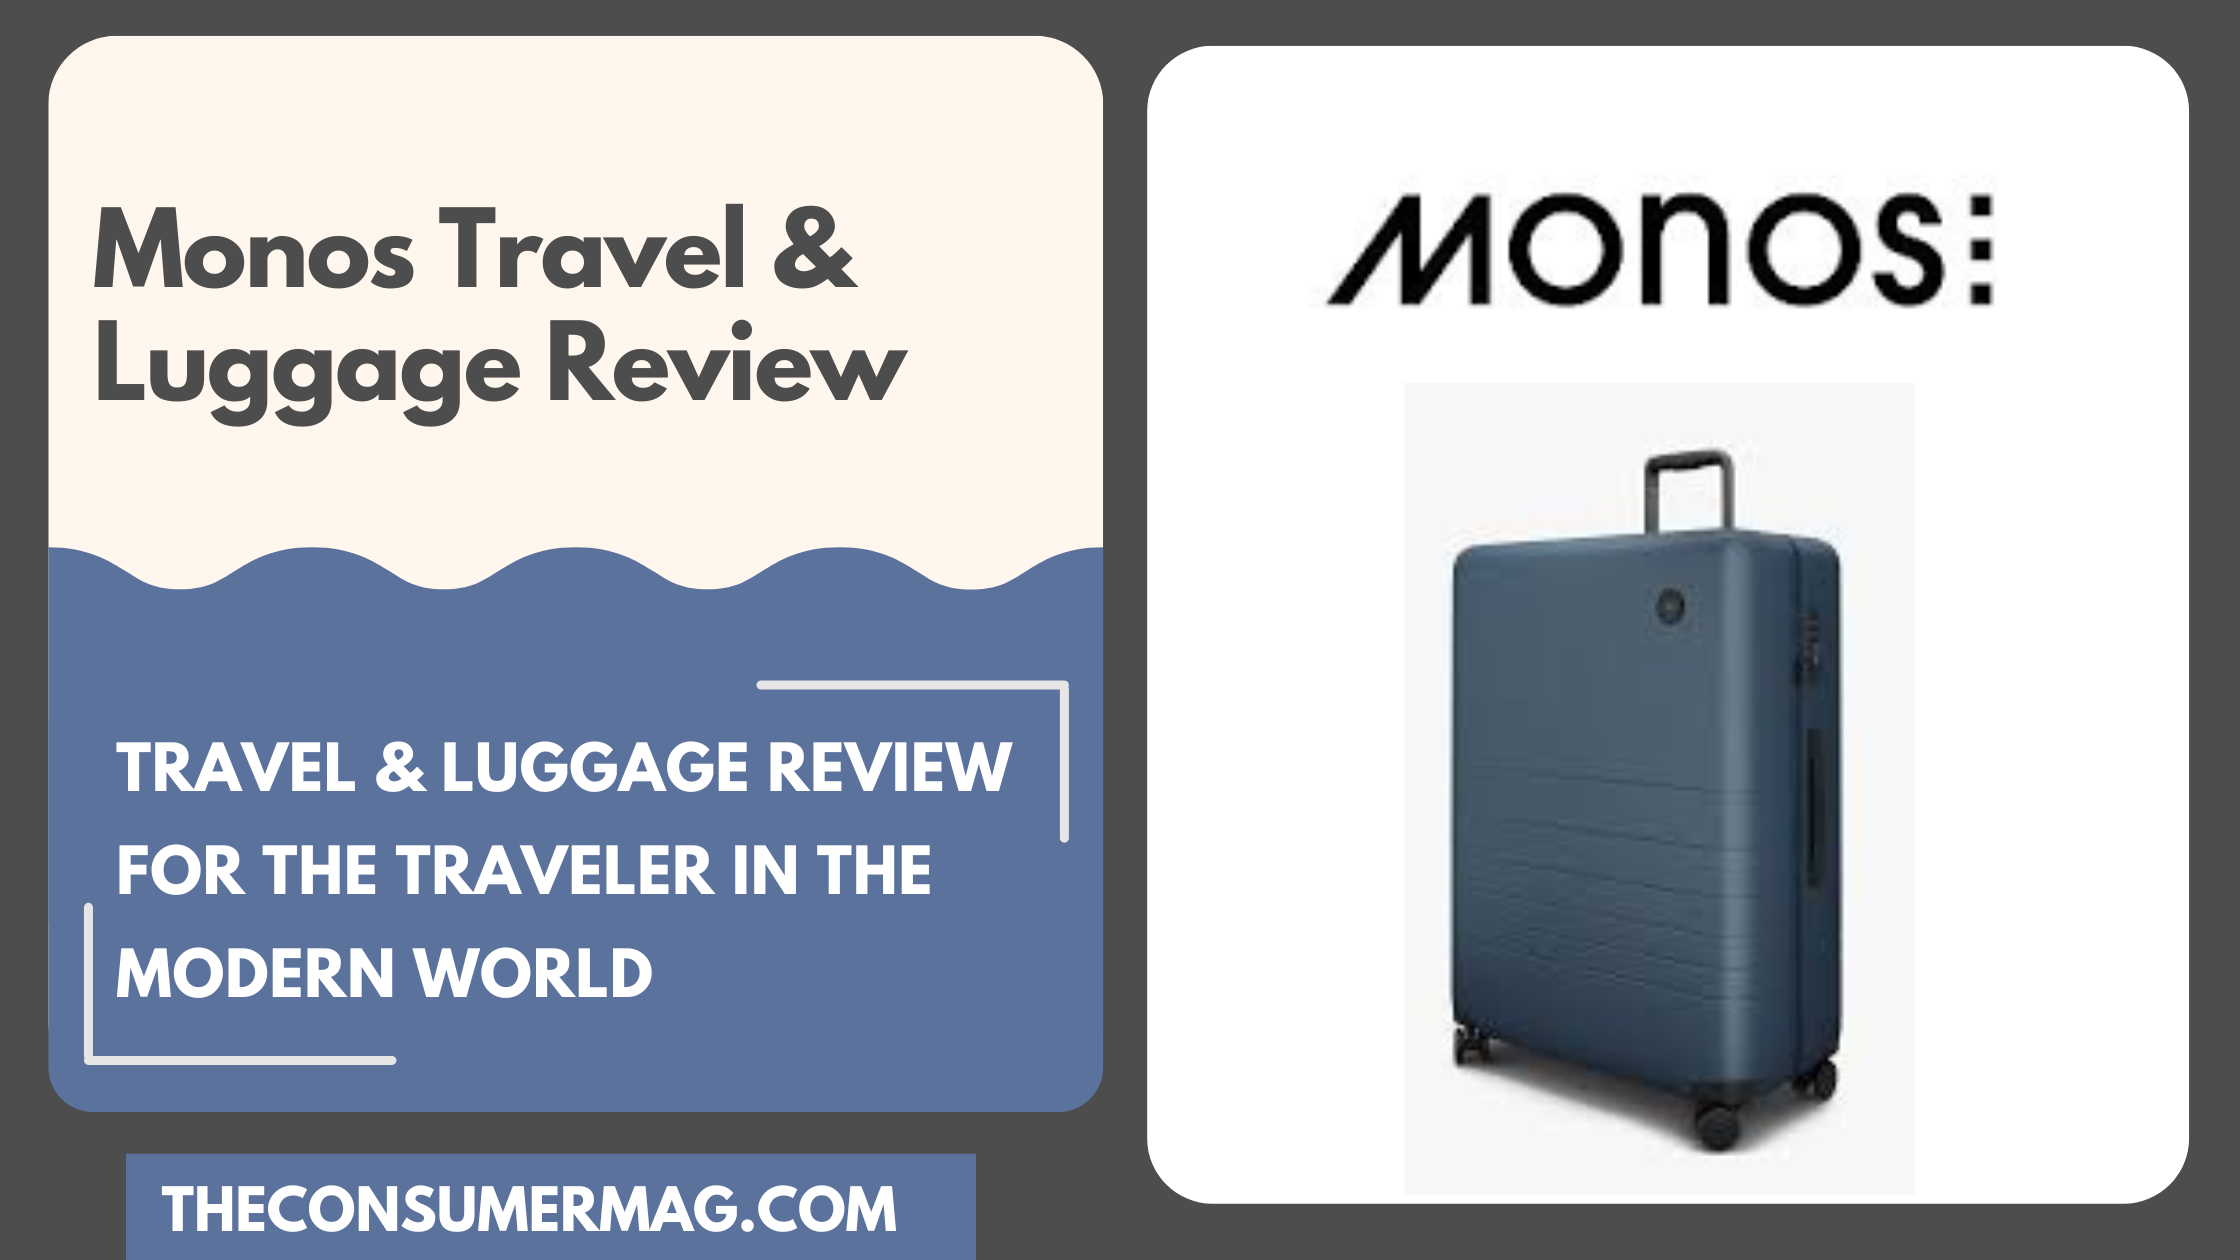 Monos Travel & Luggage featured image